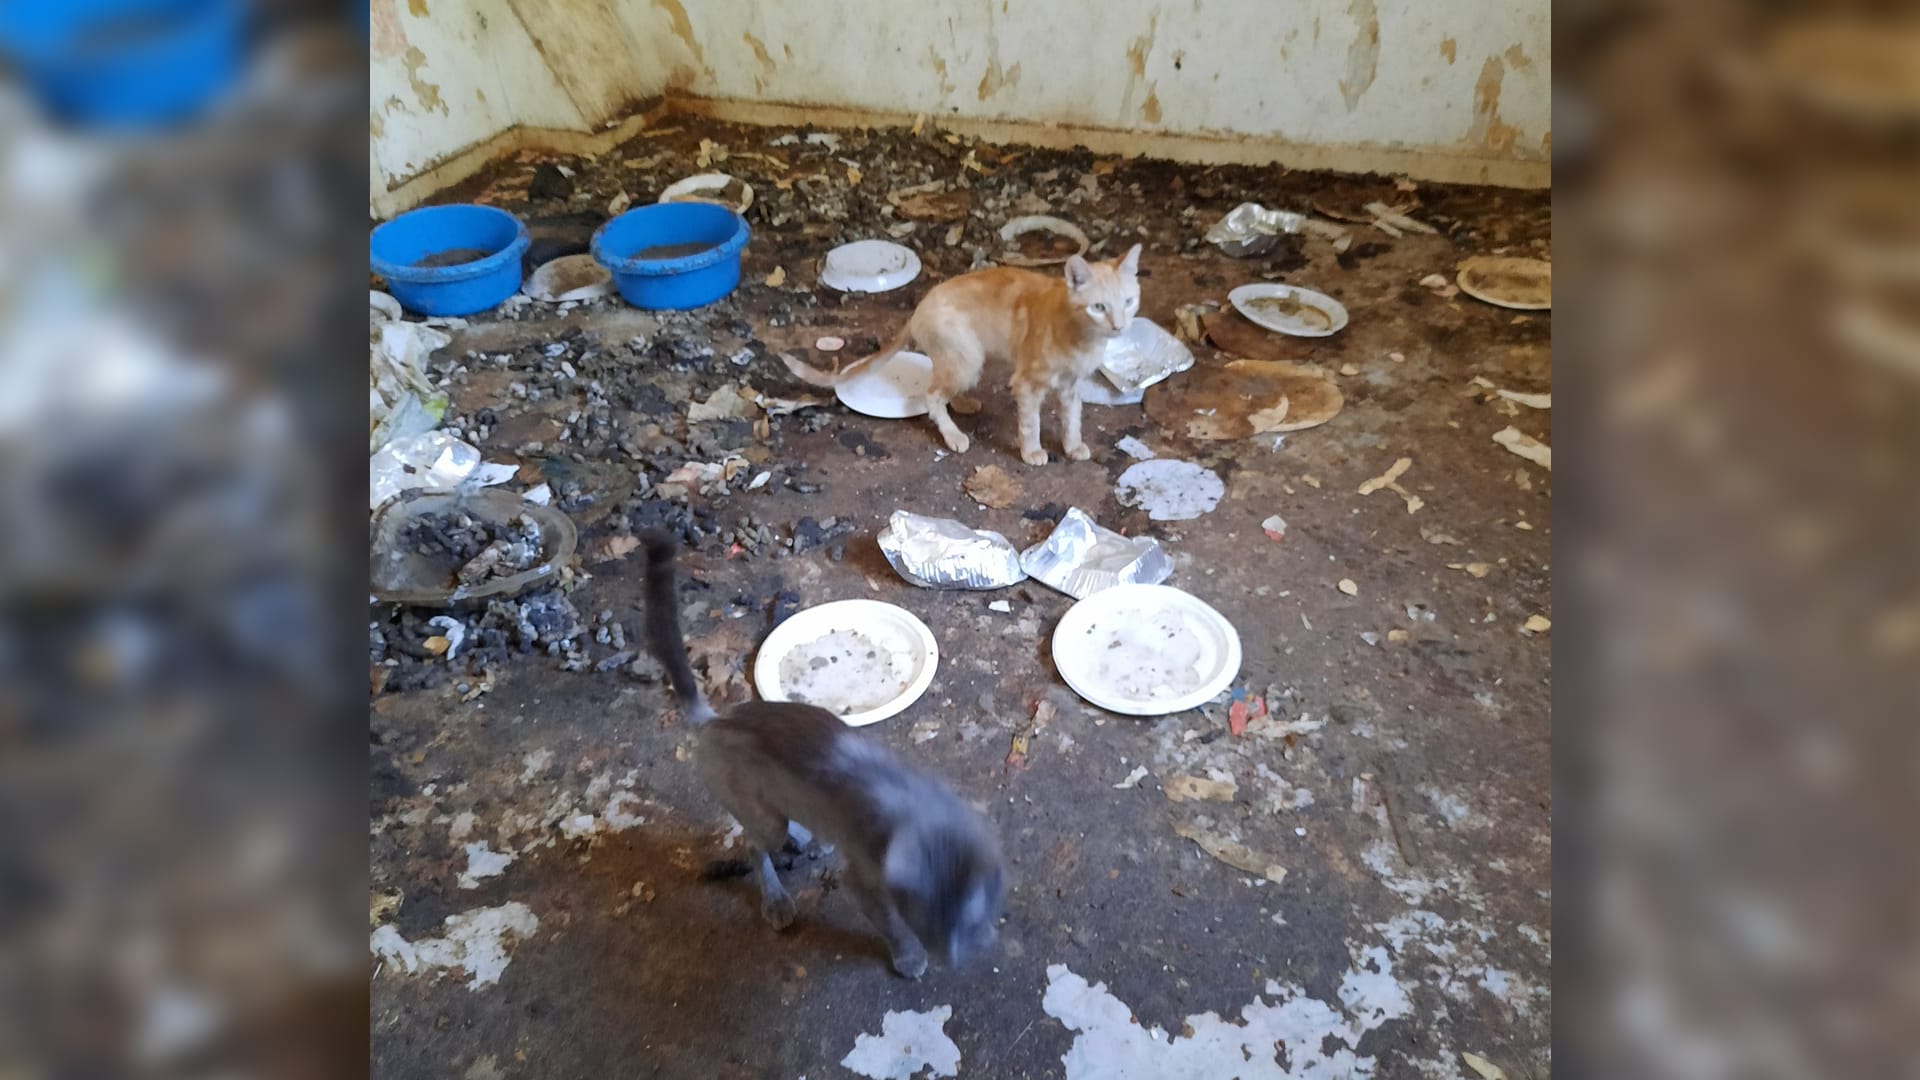 Dierenbescherming haalt 29 verwaarloosde dieren uit woning in Koewacht